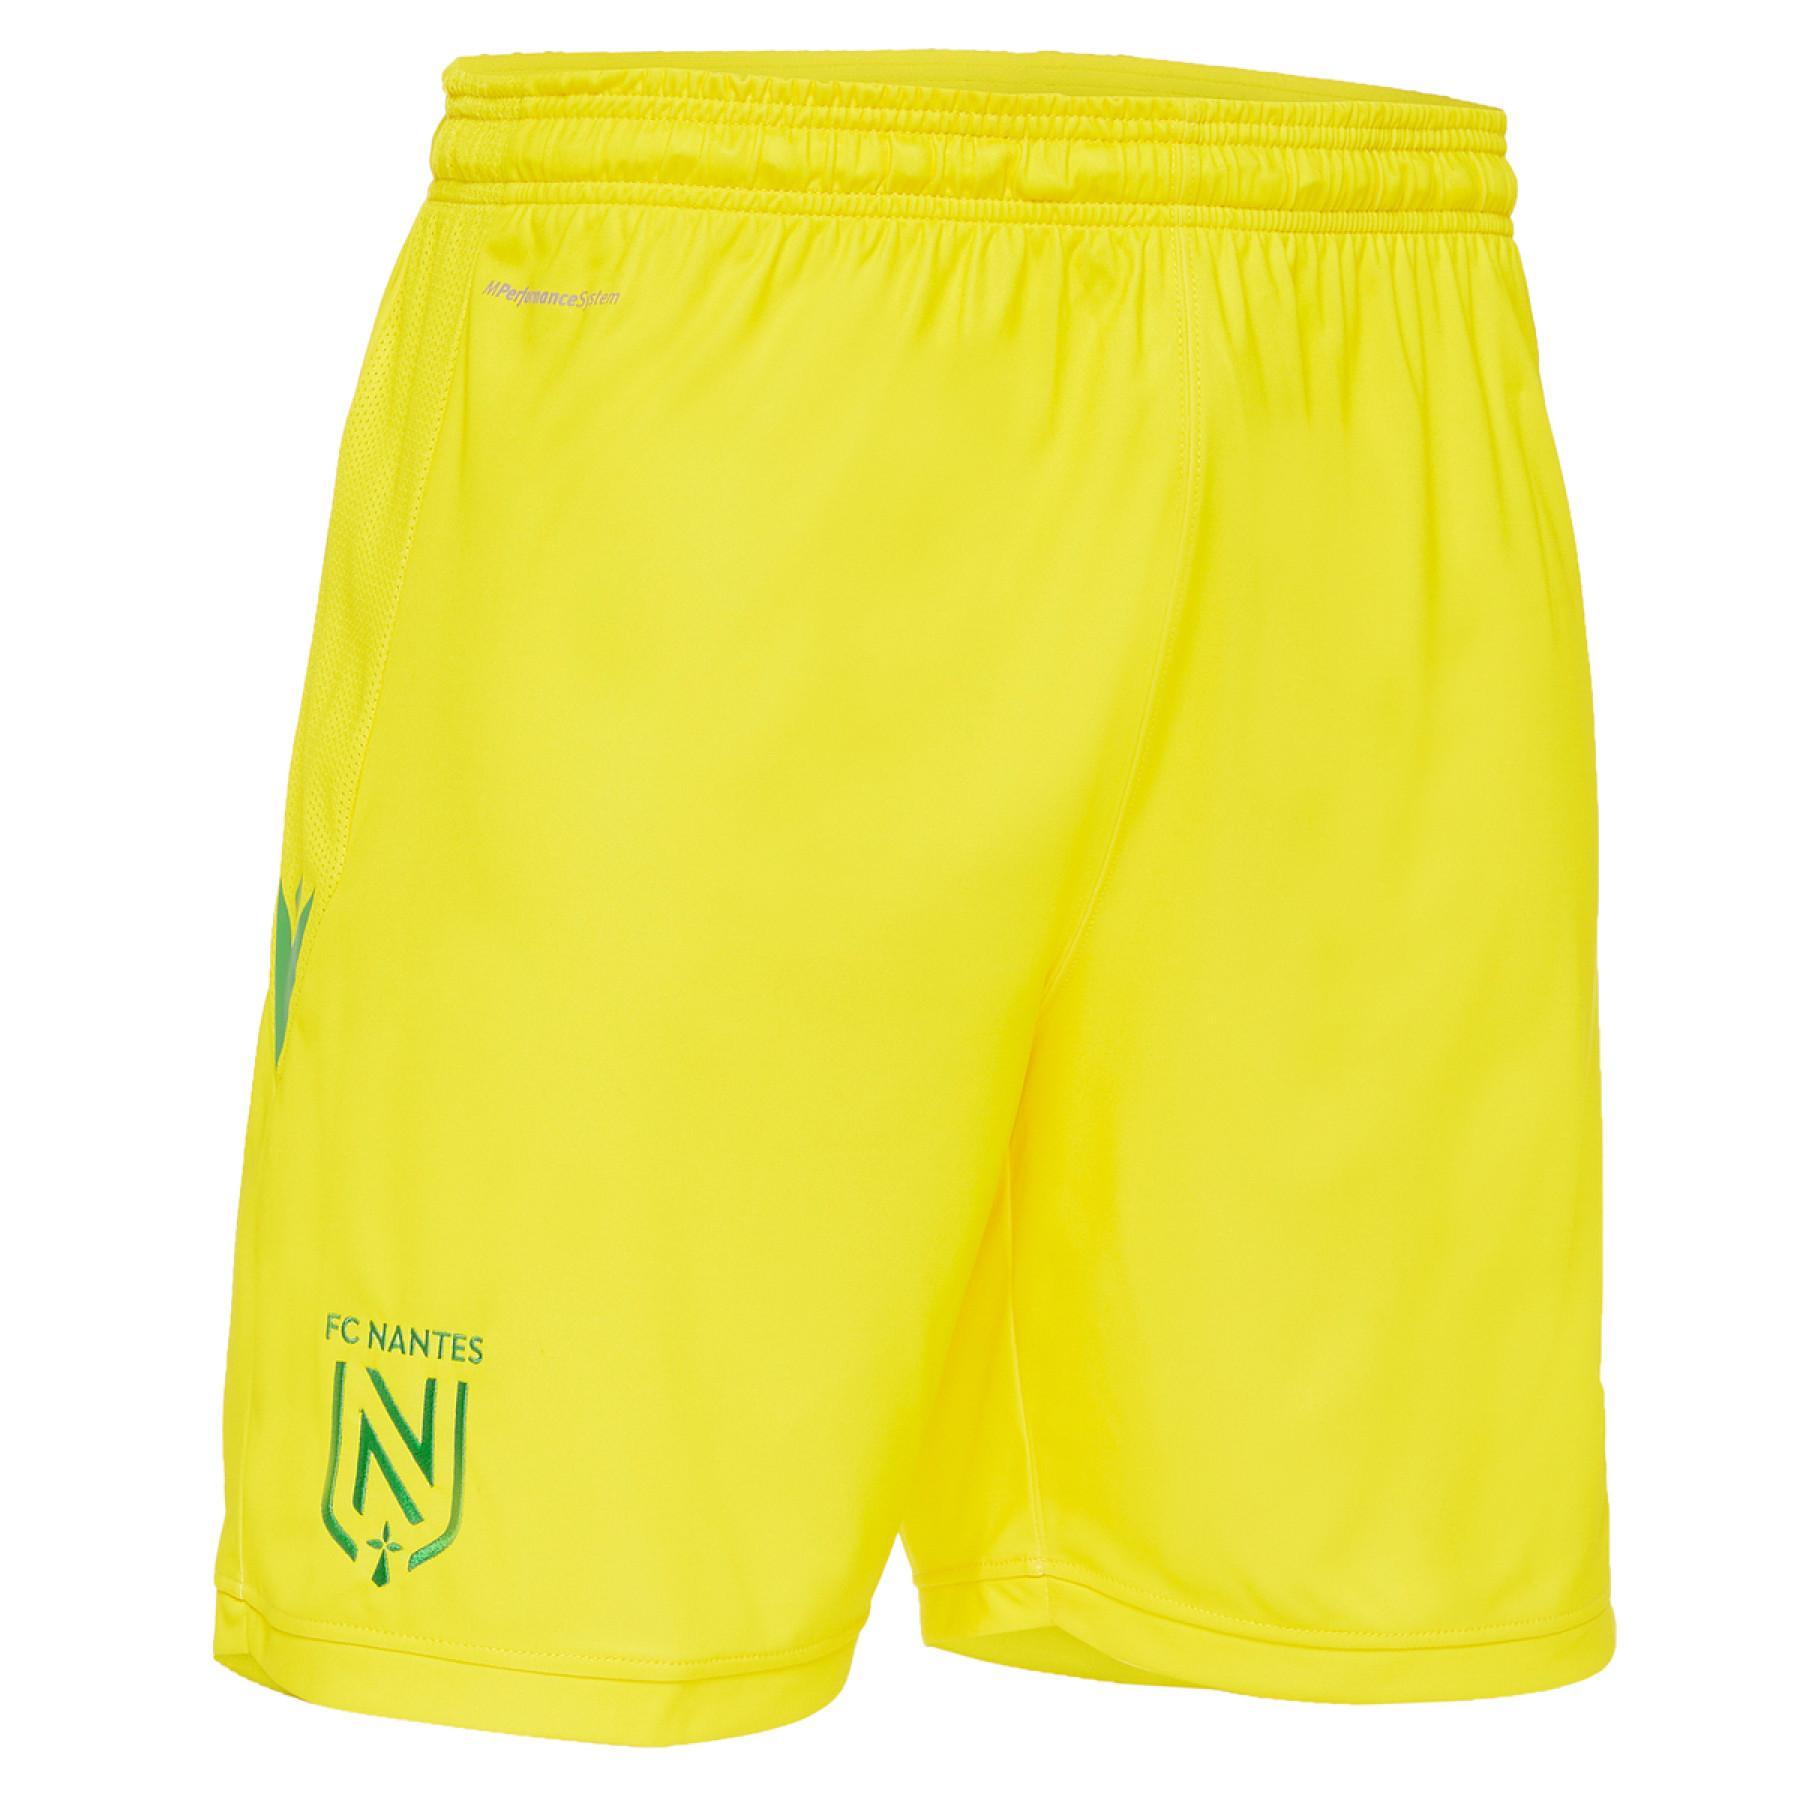 Home shorts FC Nantes 2020/21